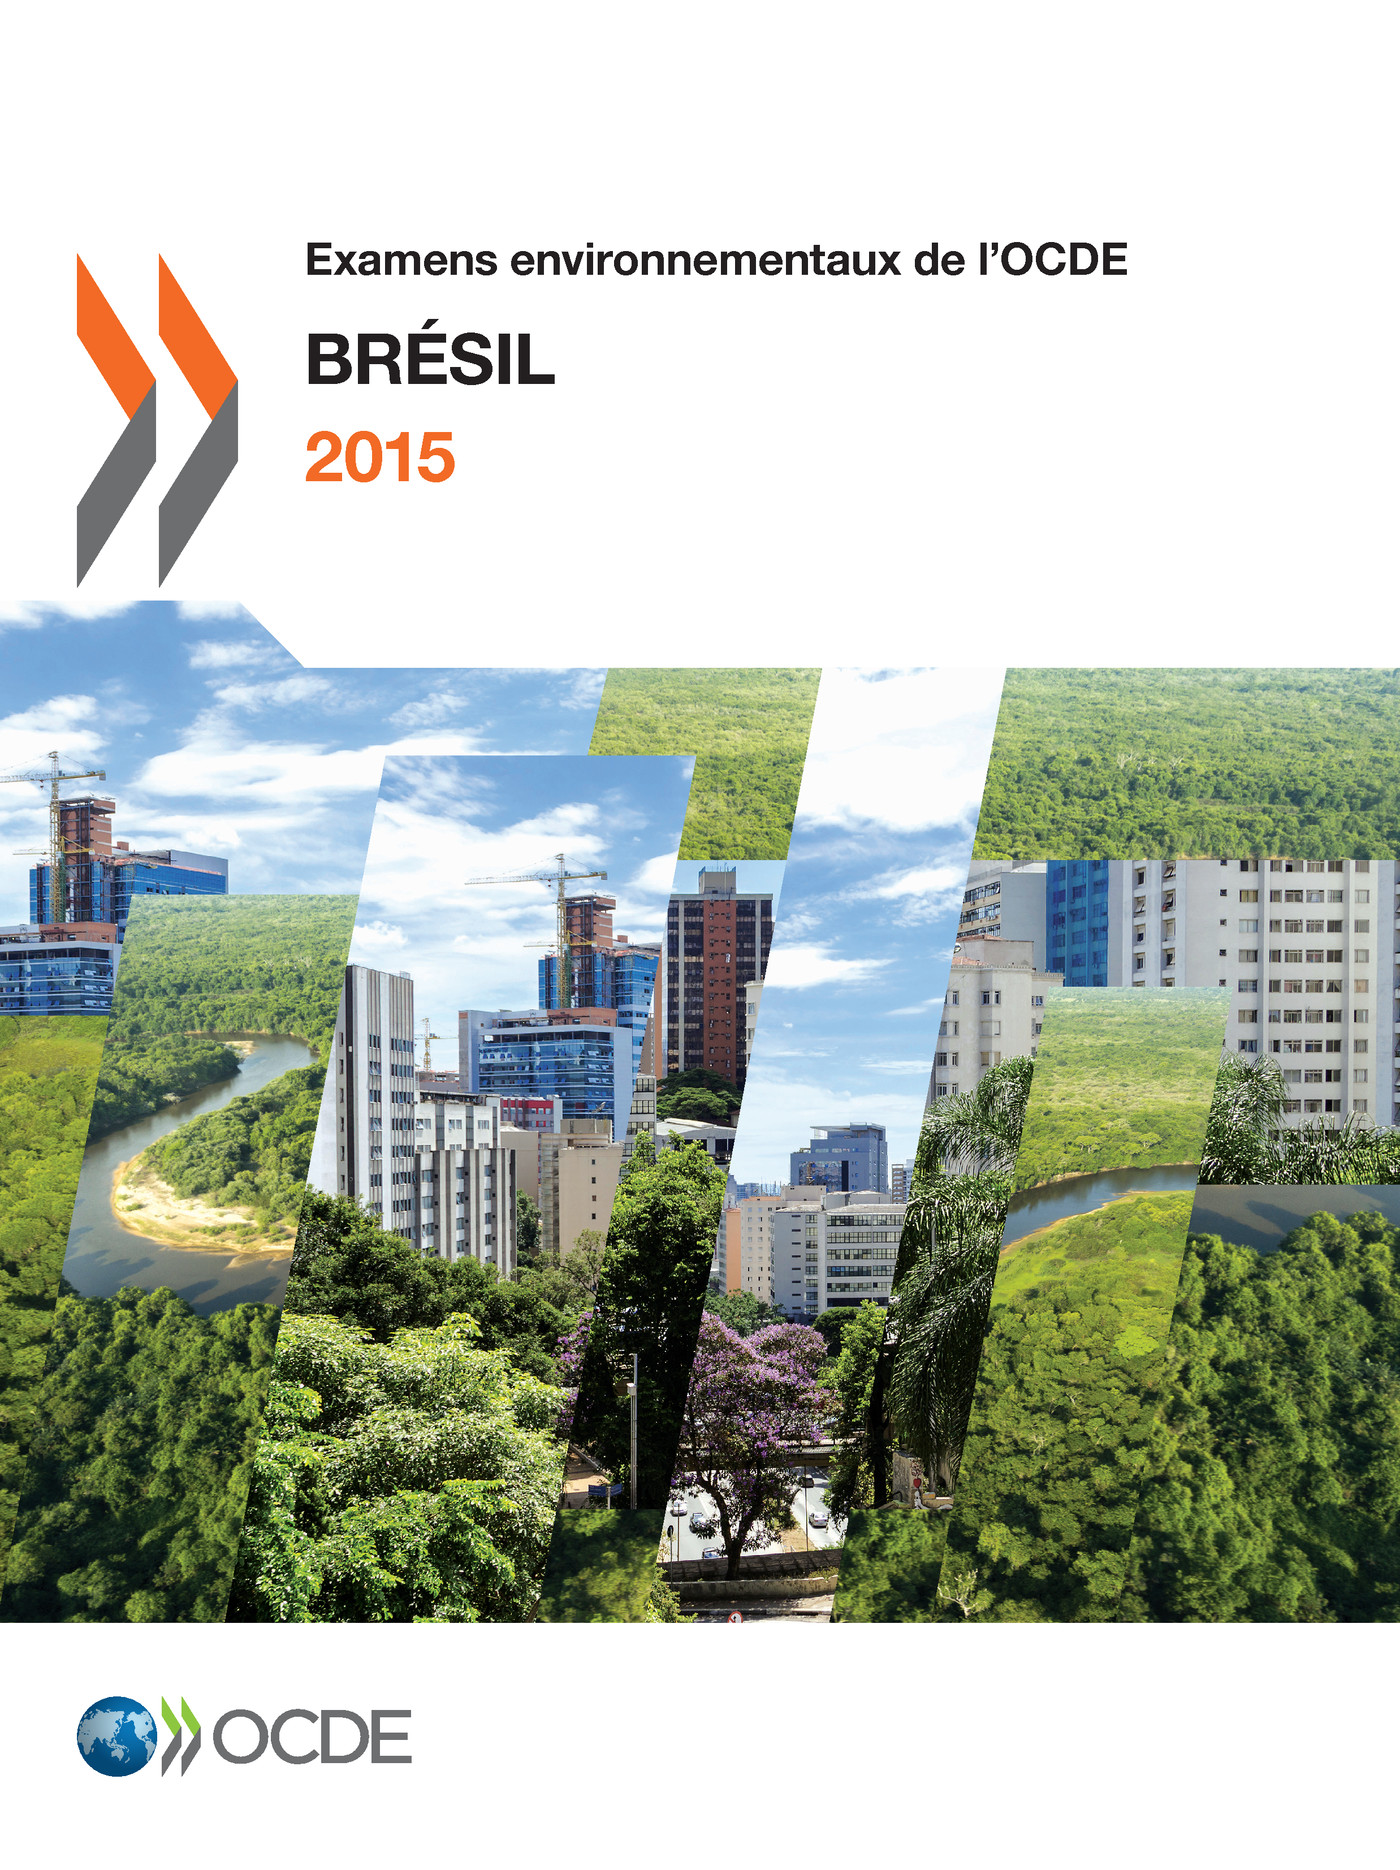 Examens environnementaux de l'OCDE : Brésil 2015 -  Collectif - OCDE / OECD